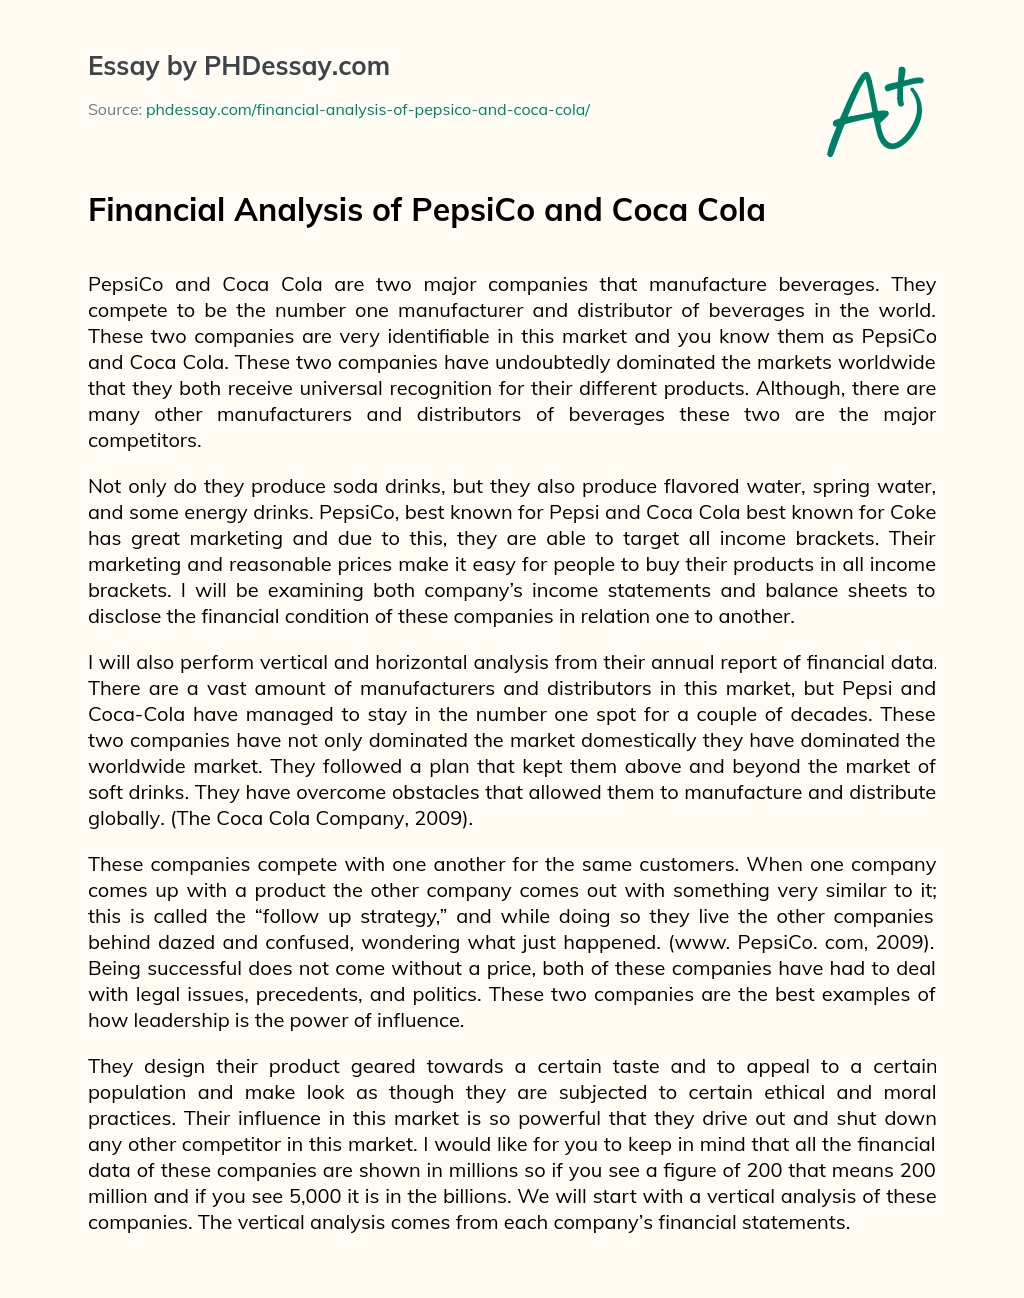 Financial Analysis of PepsiCo and Coca Cola essay